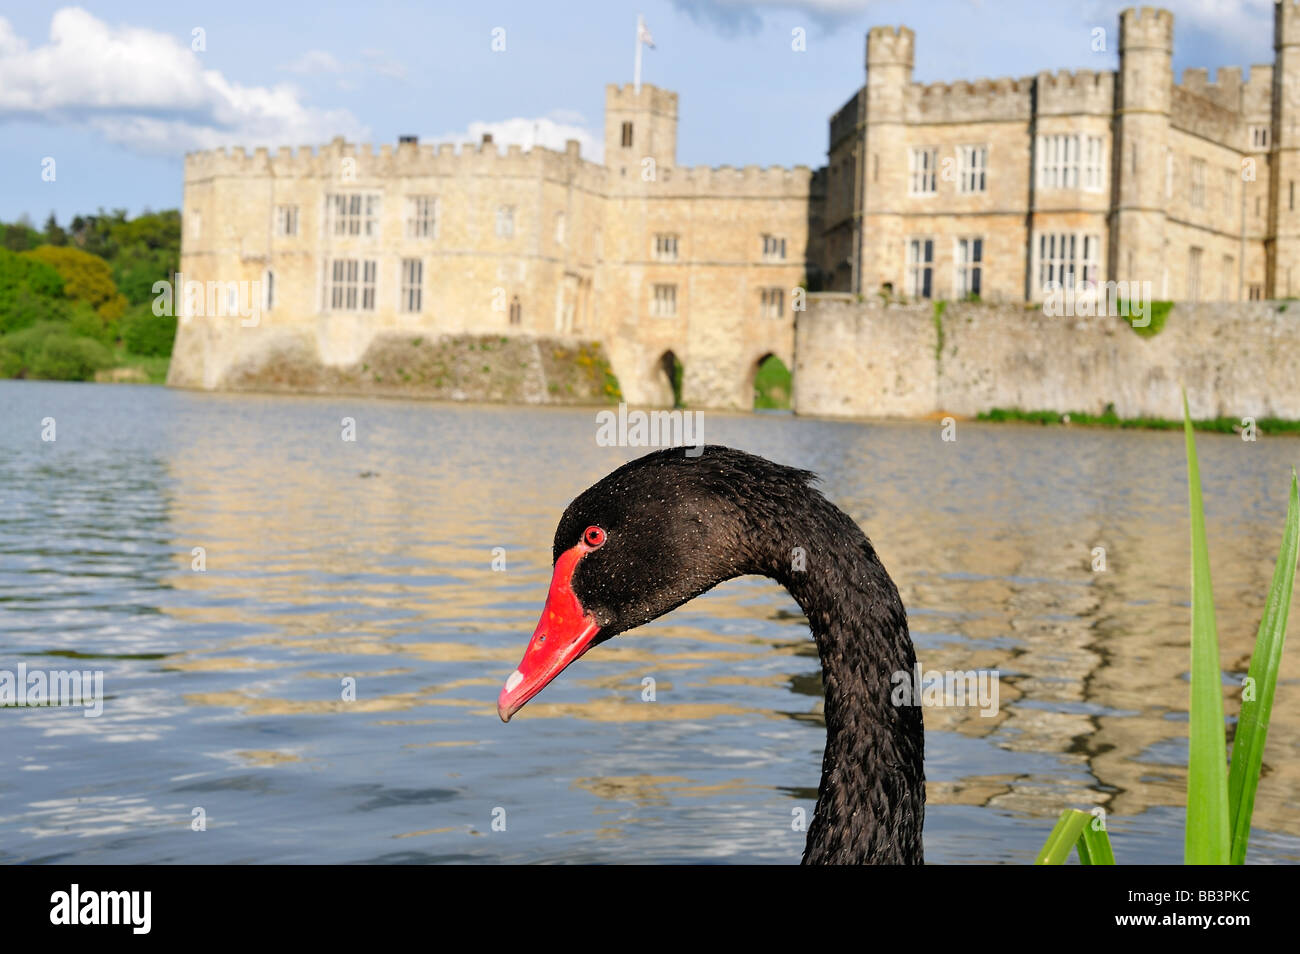 Leeds Castle with black swan Stock Photo - Alamy